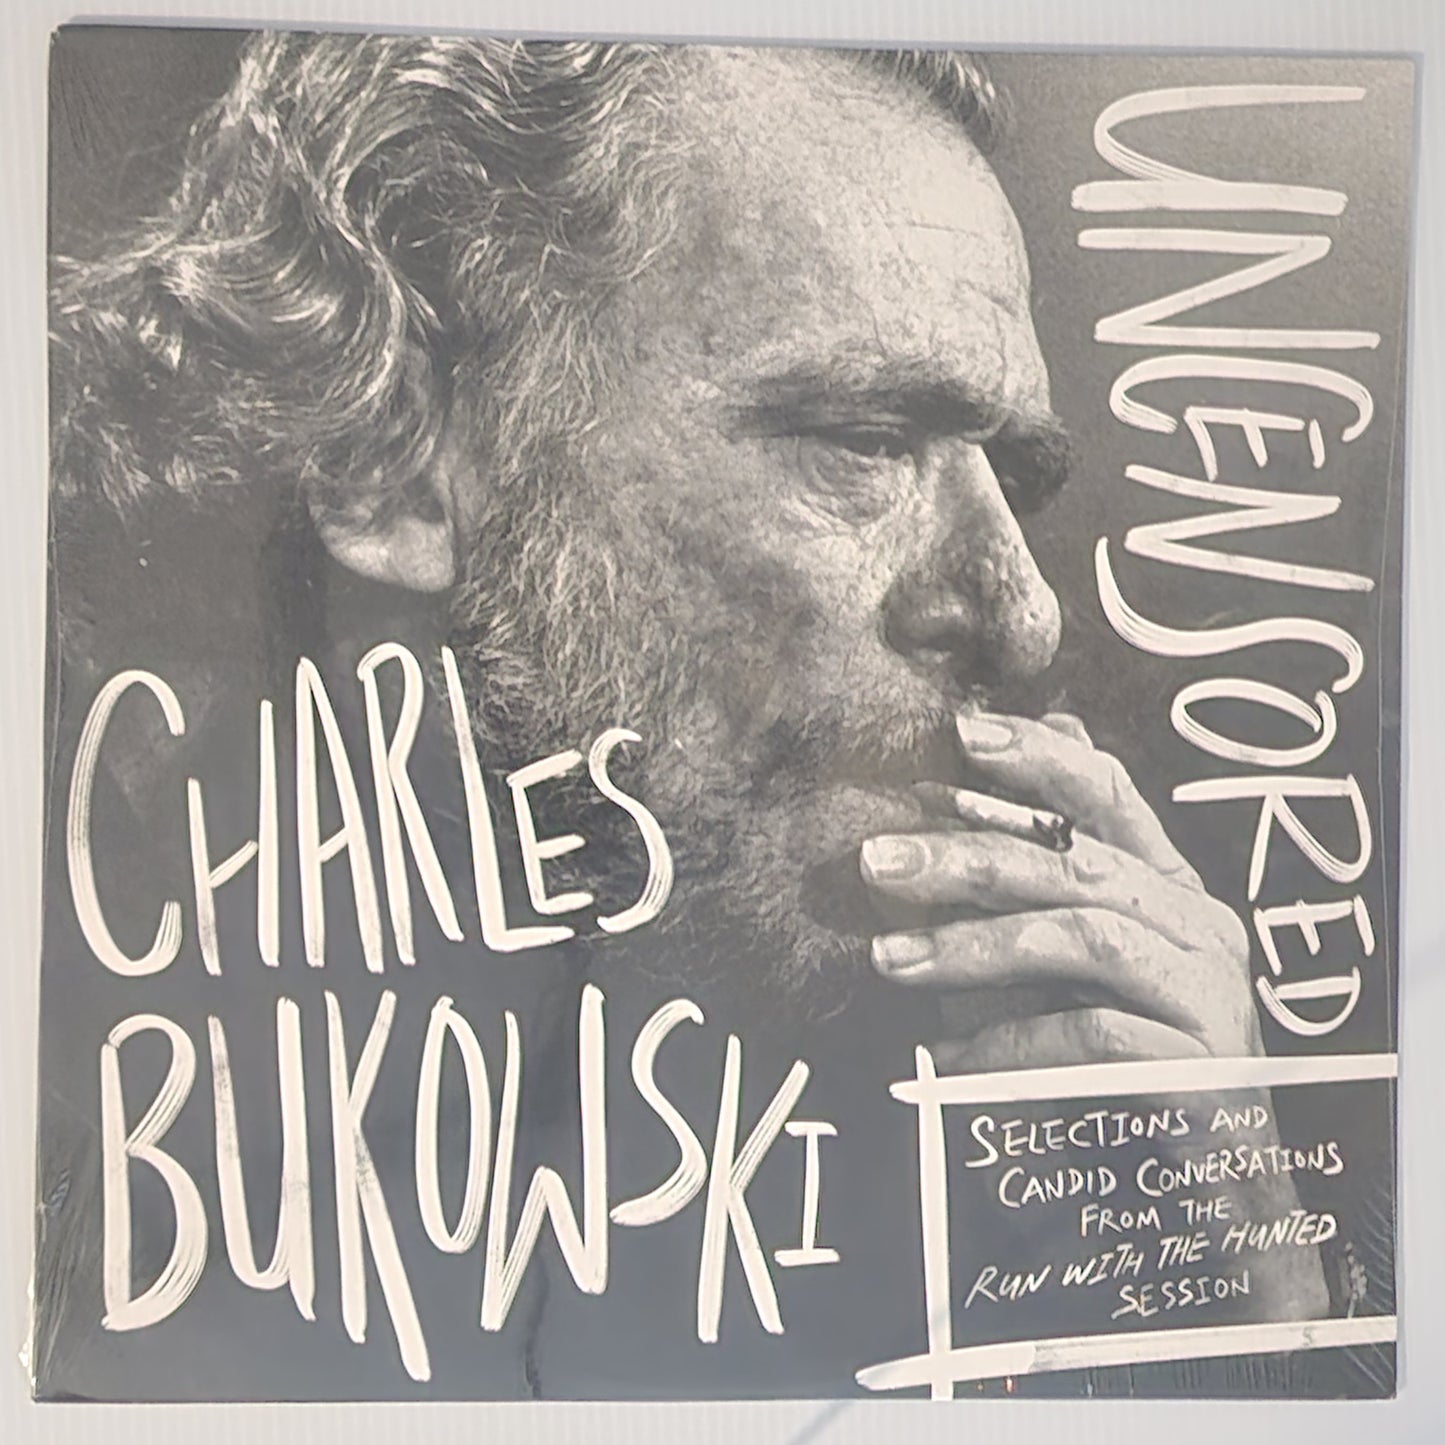 New, Sealed, Charles Bukowski Uncensored LP: HarperCollins 2019